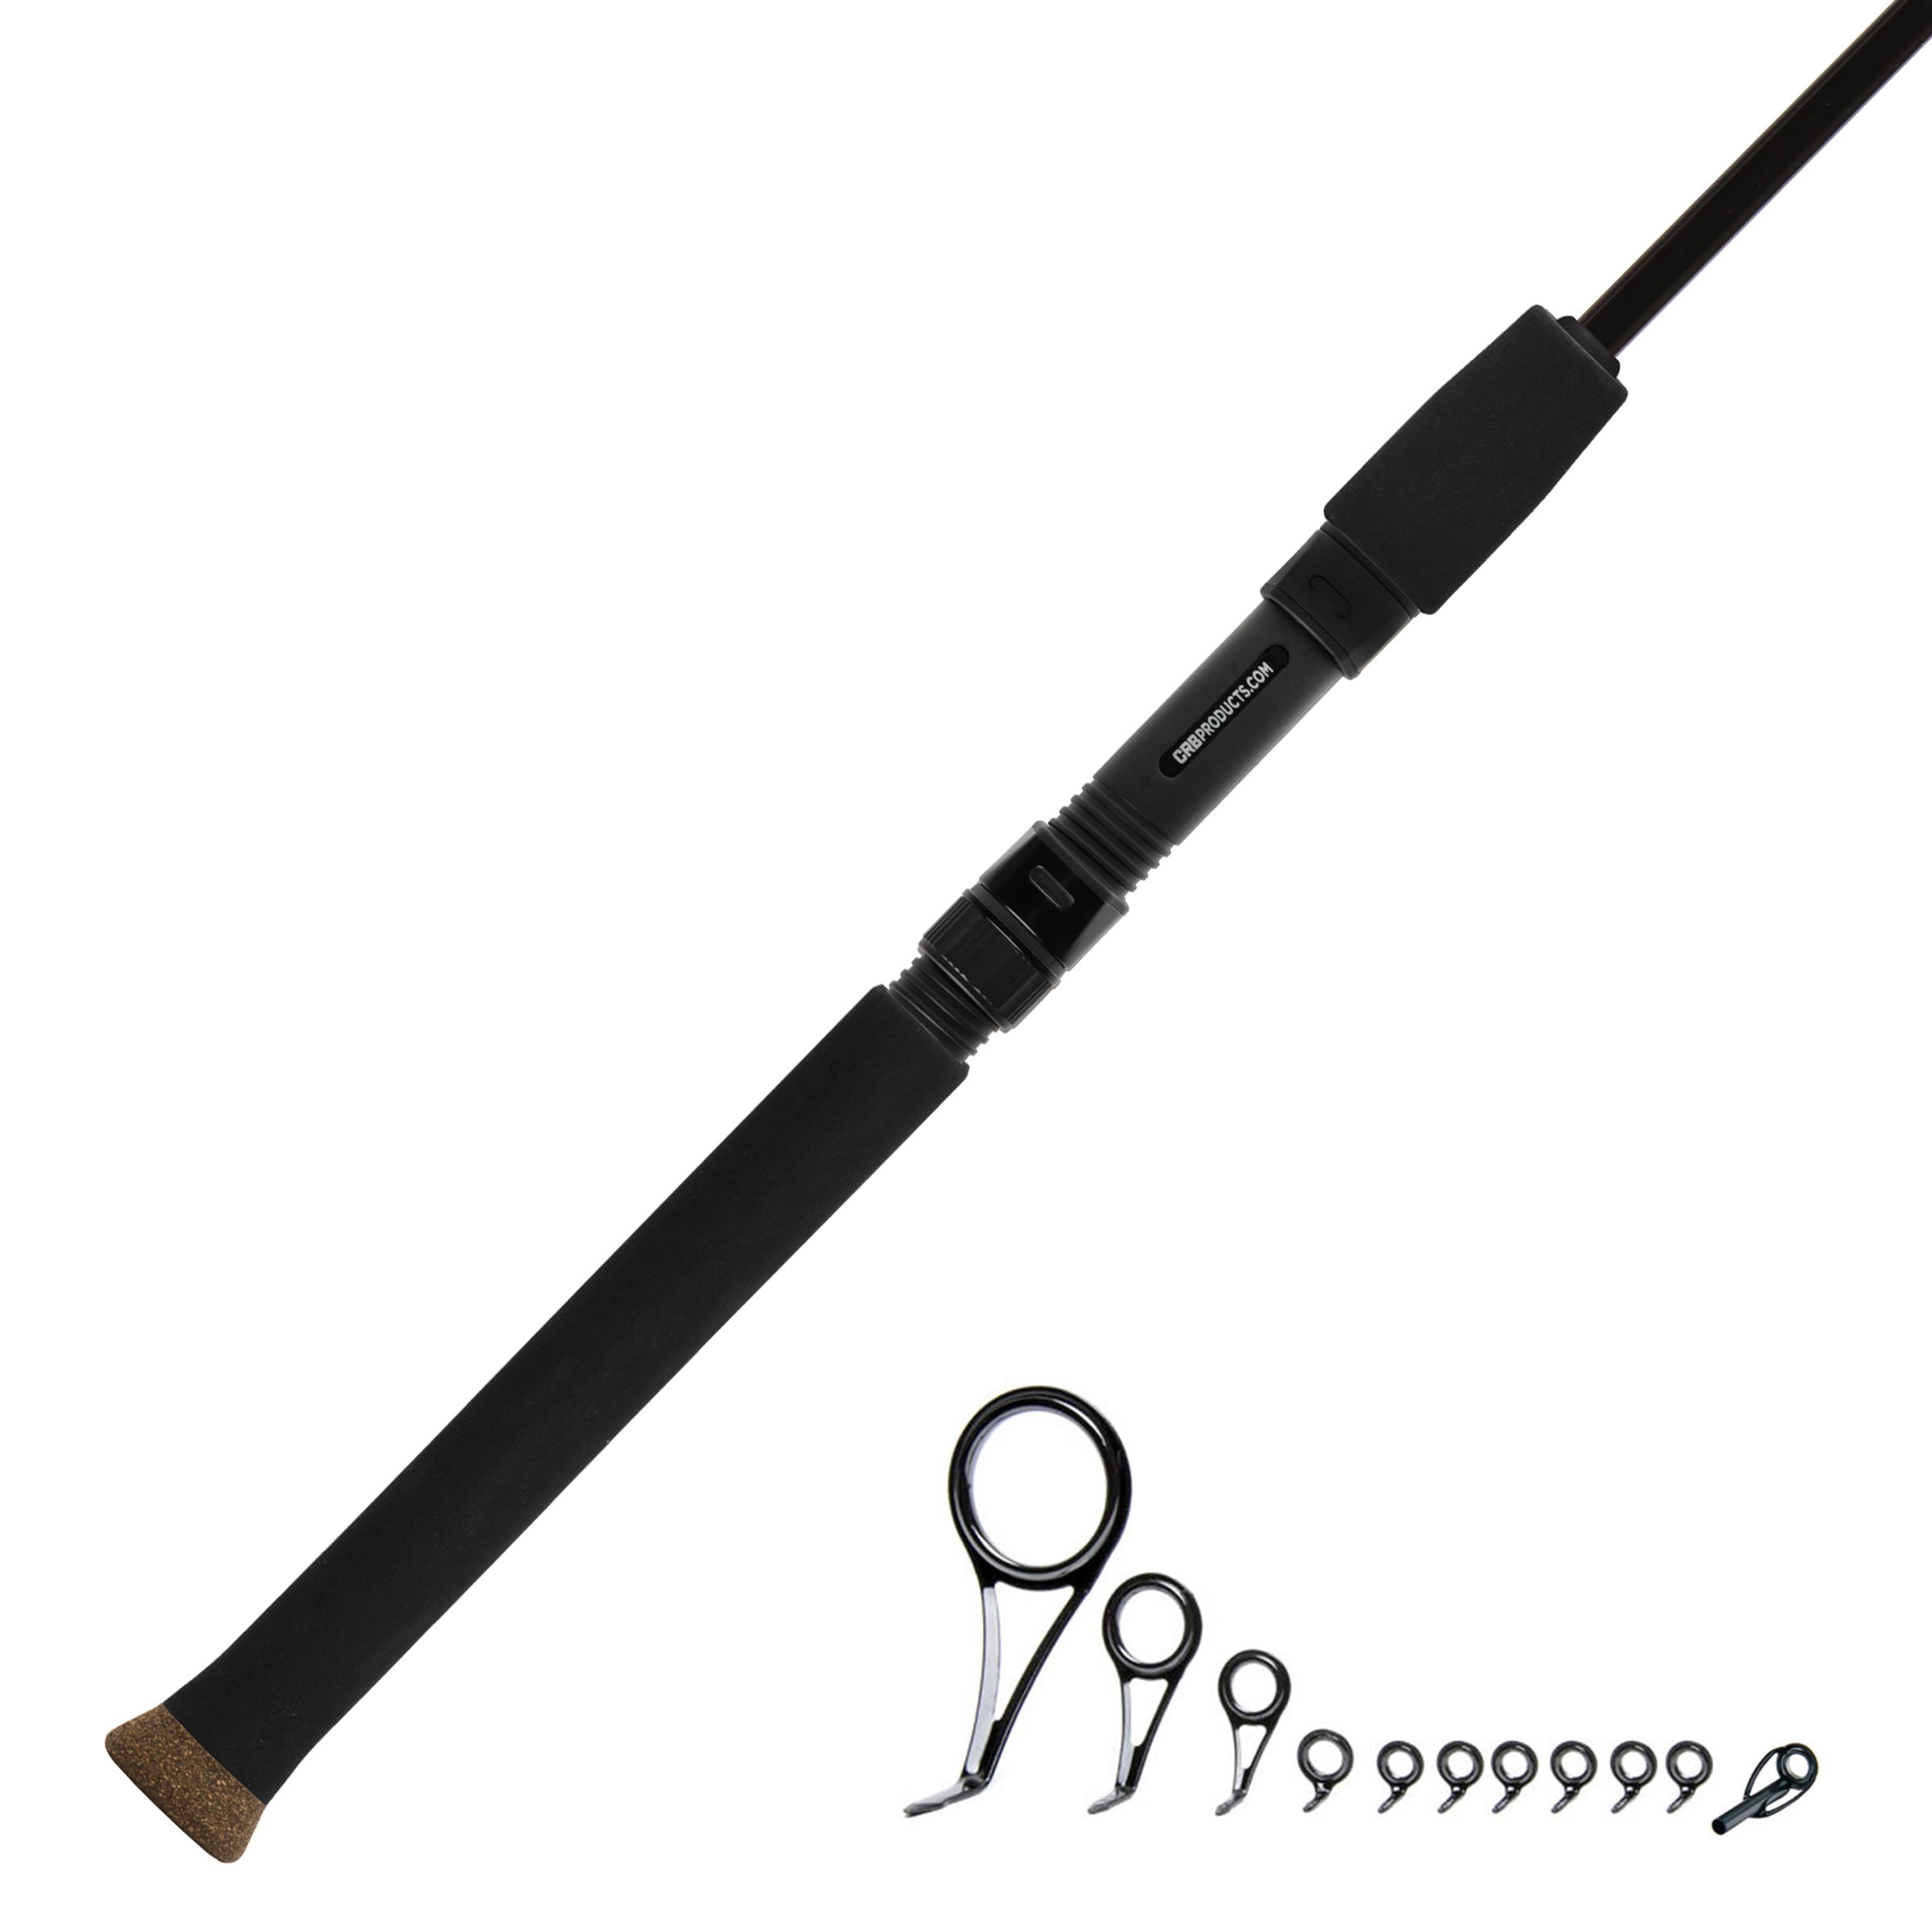 6' Medium Spinning Rod - (RRCS602M) - Black/Cork